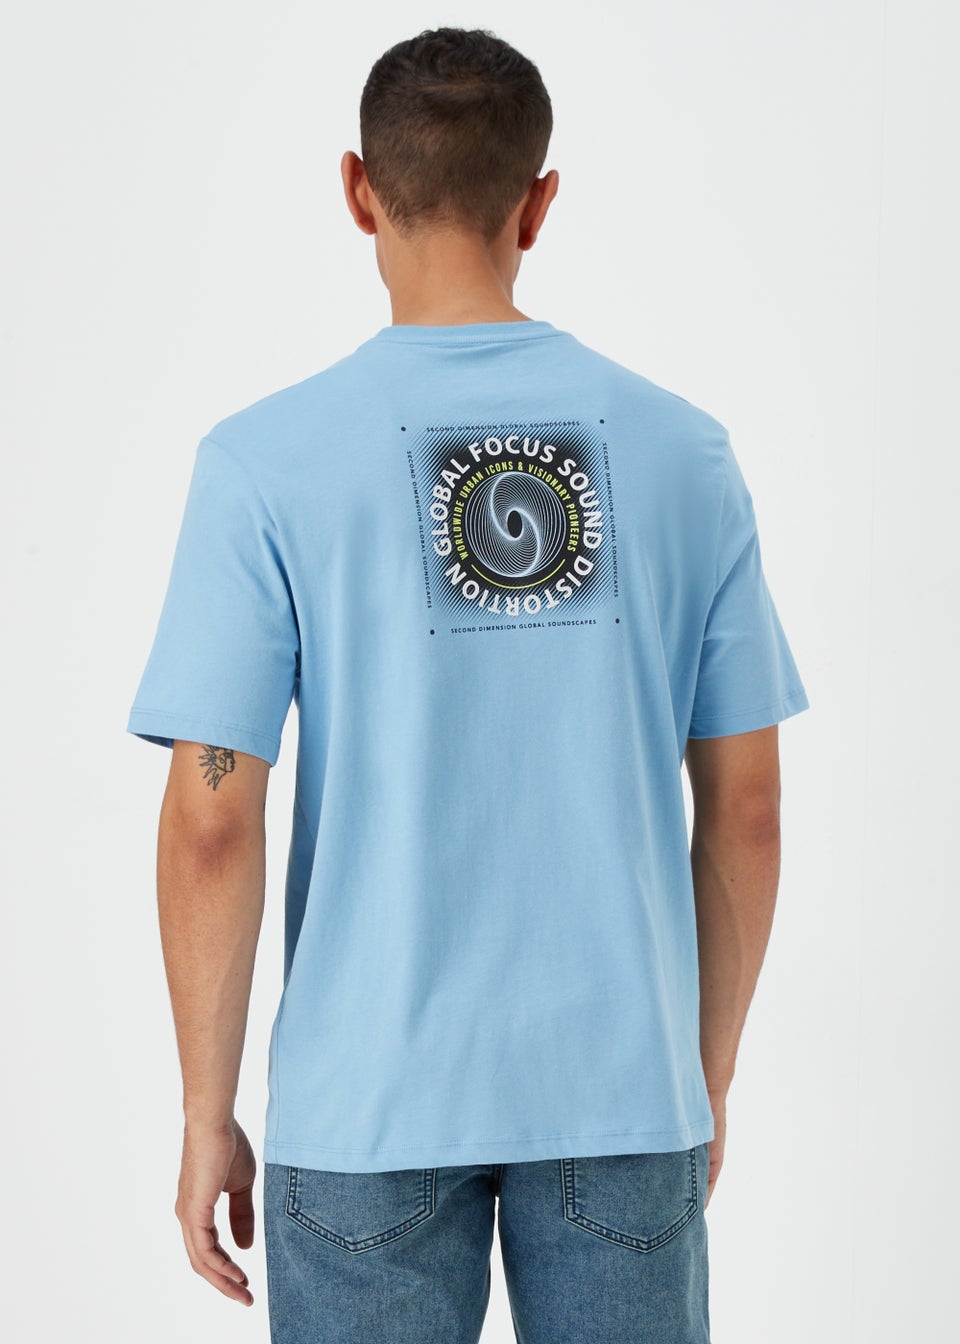 US Athletic Light Blue Graphic T-Shirt